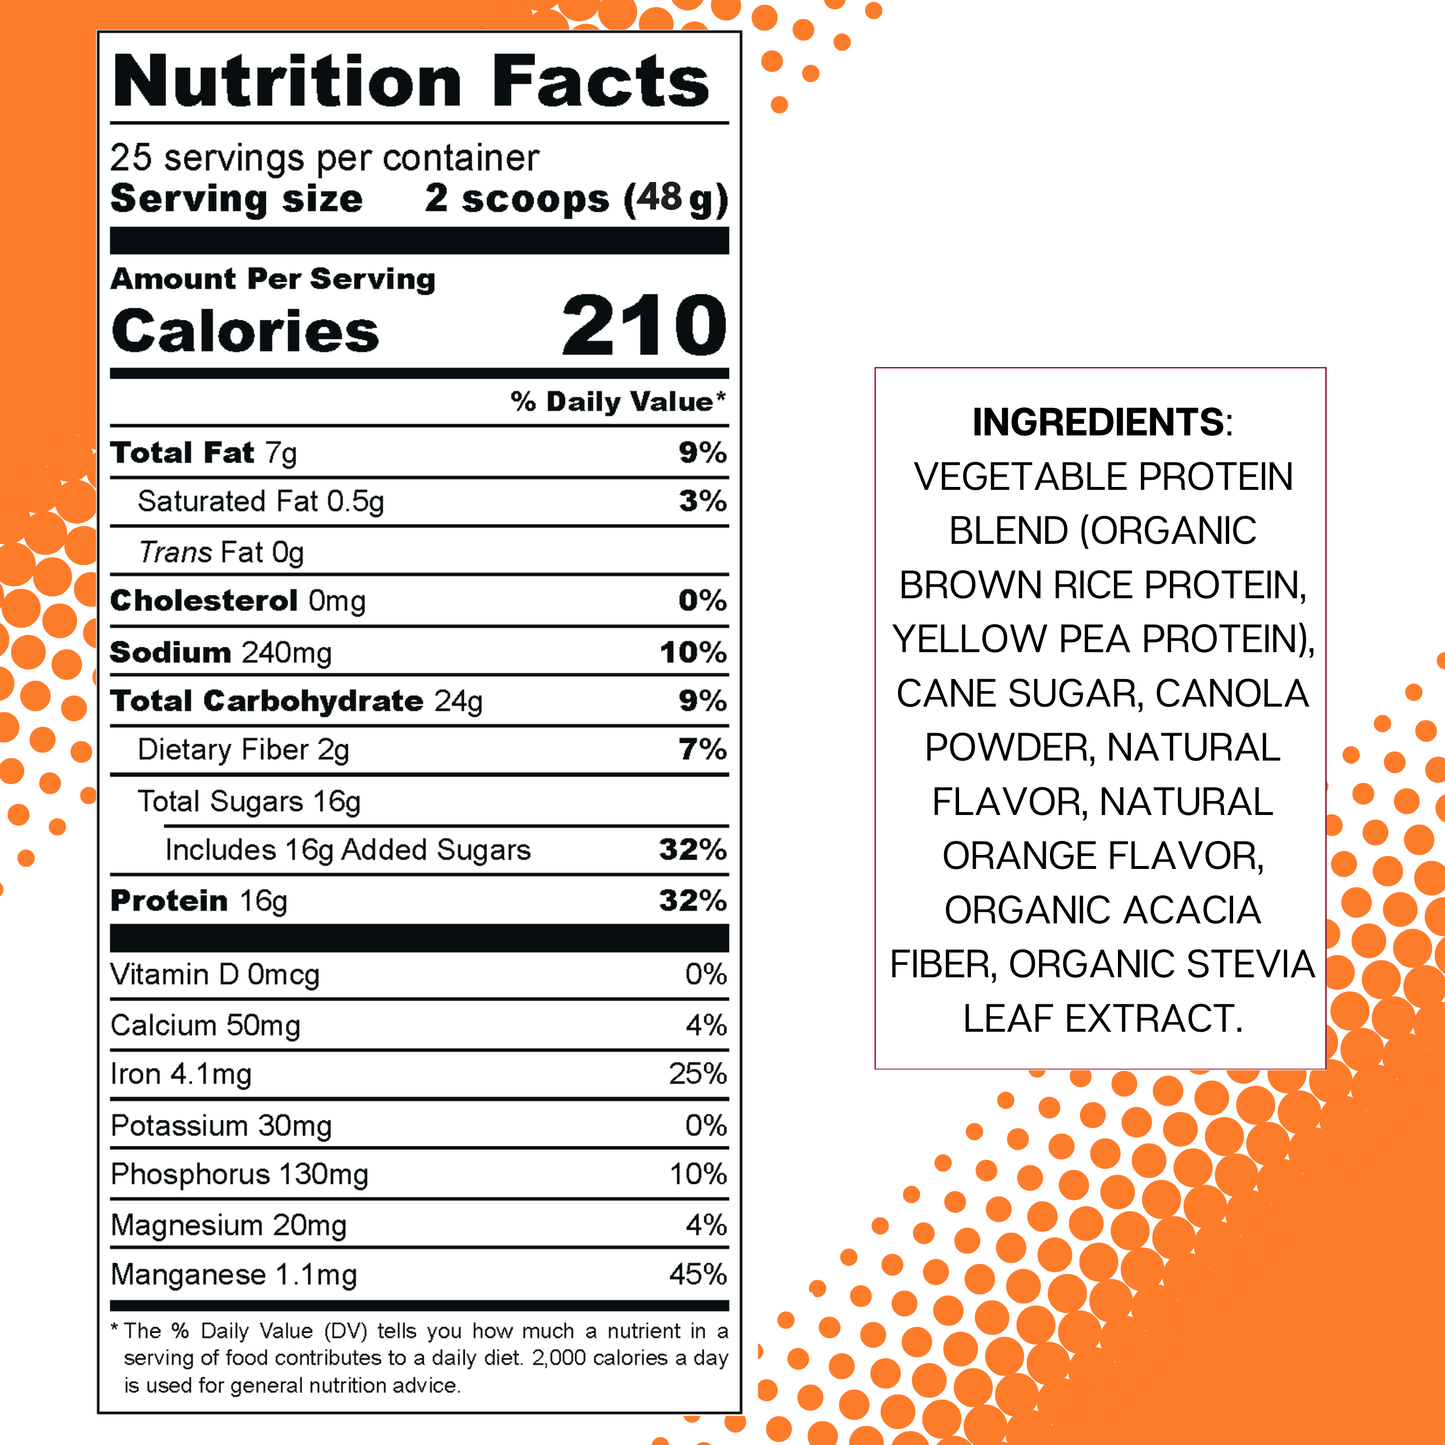 Orange low fodmap drink nutritional information and ingredients